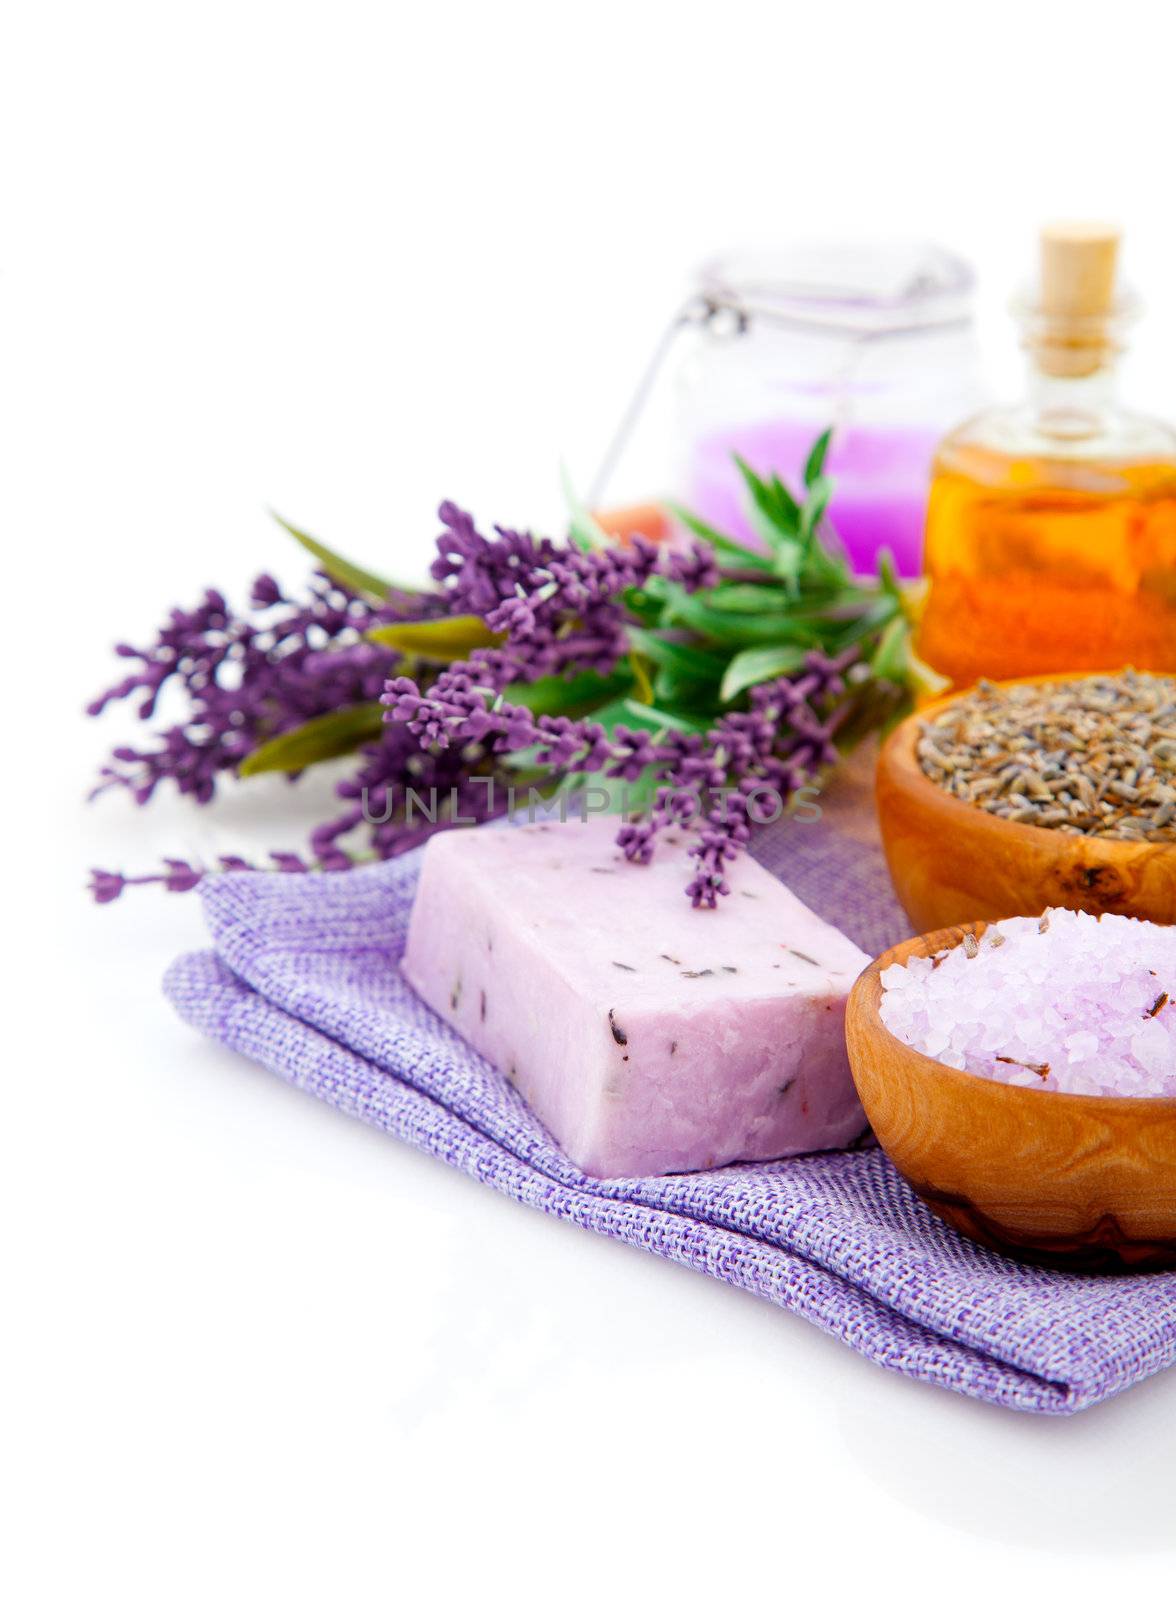 Spa treatment. Lavender bath salt, soap, oil and lavender flower by motorolka